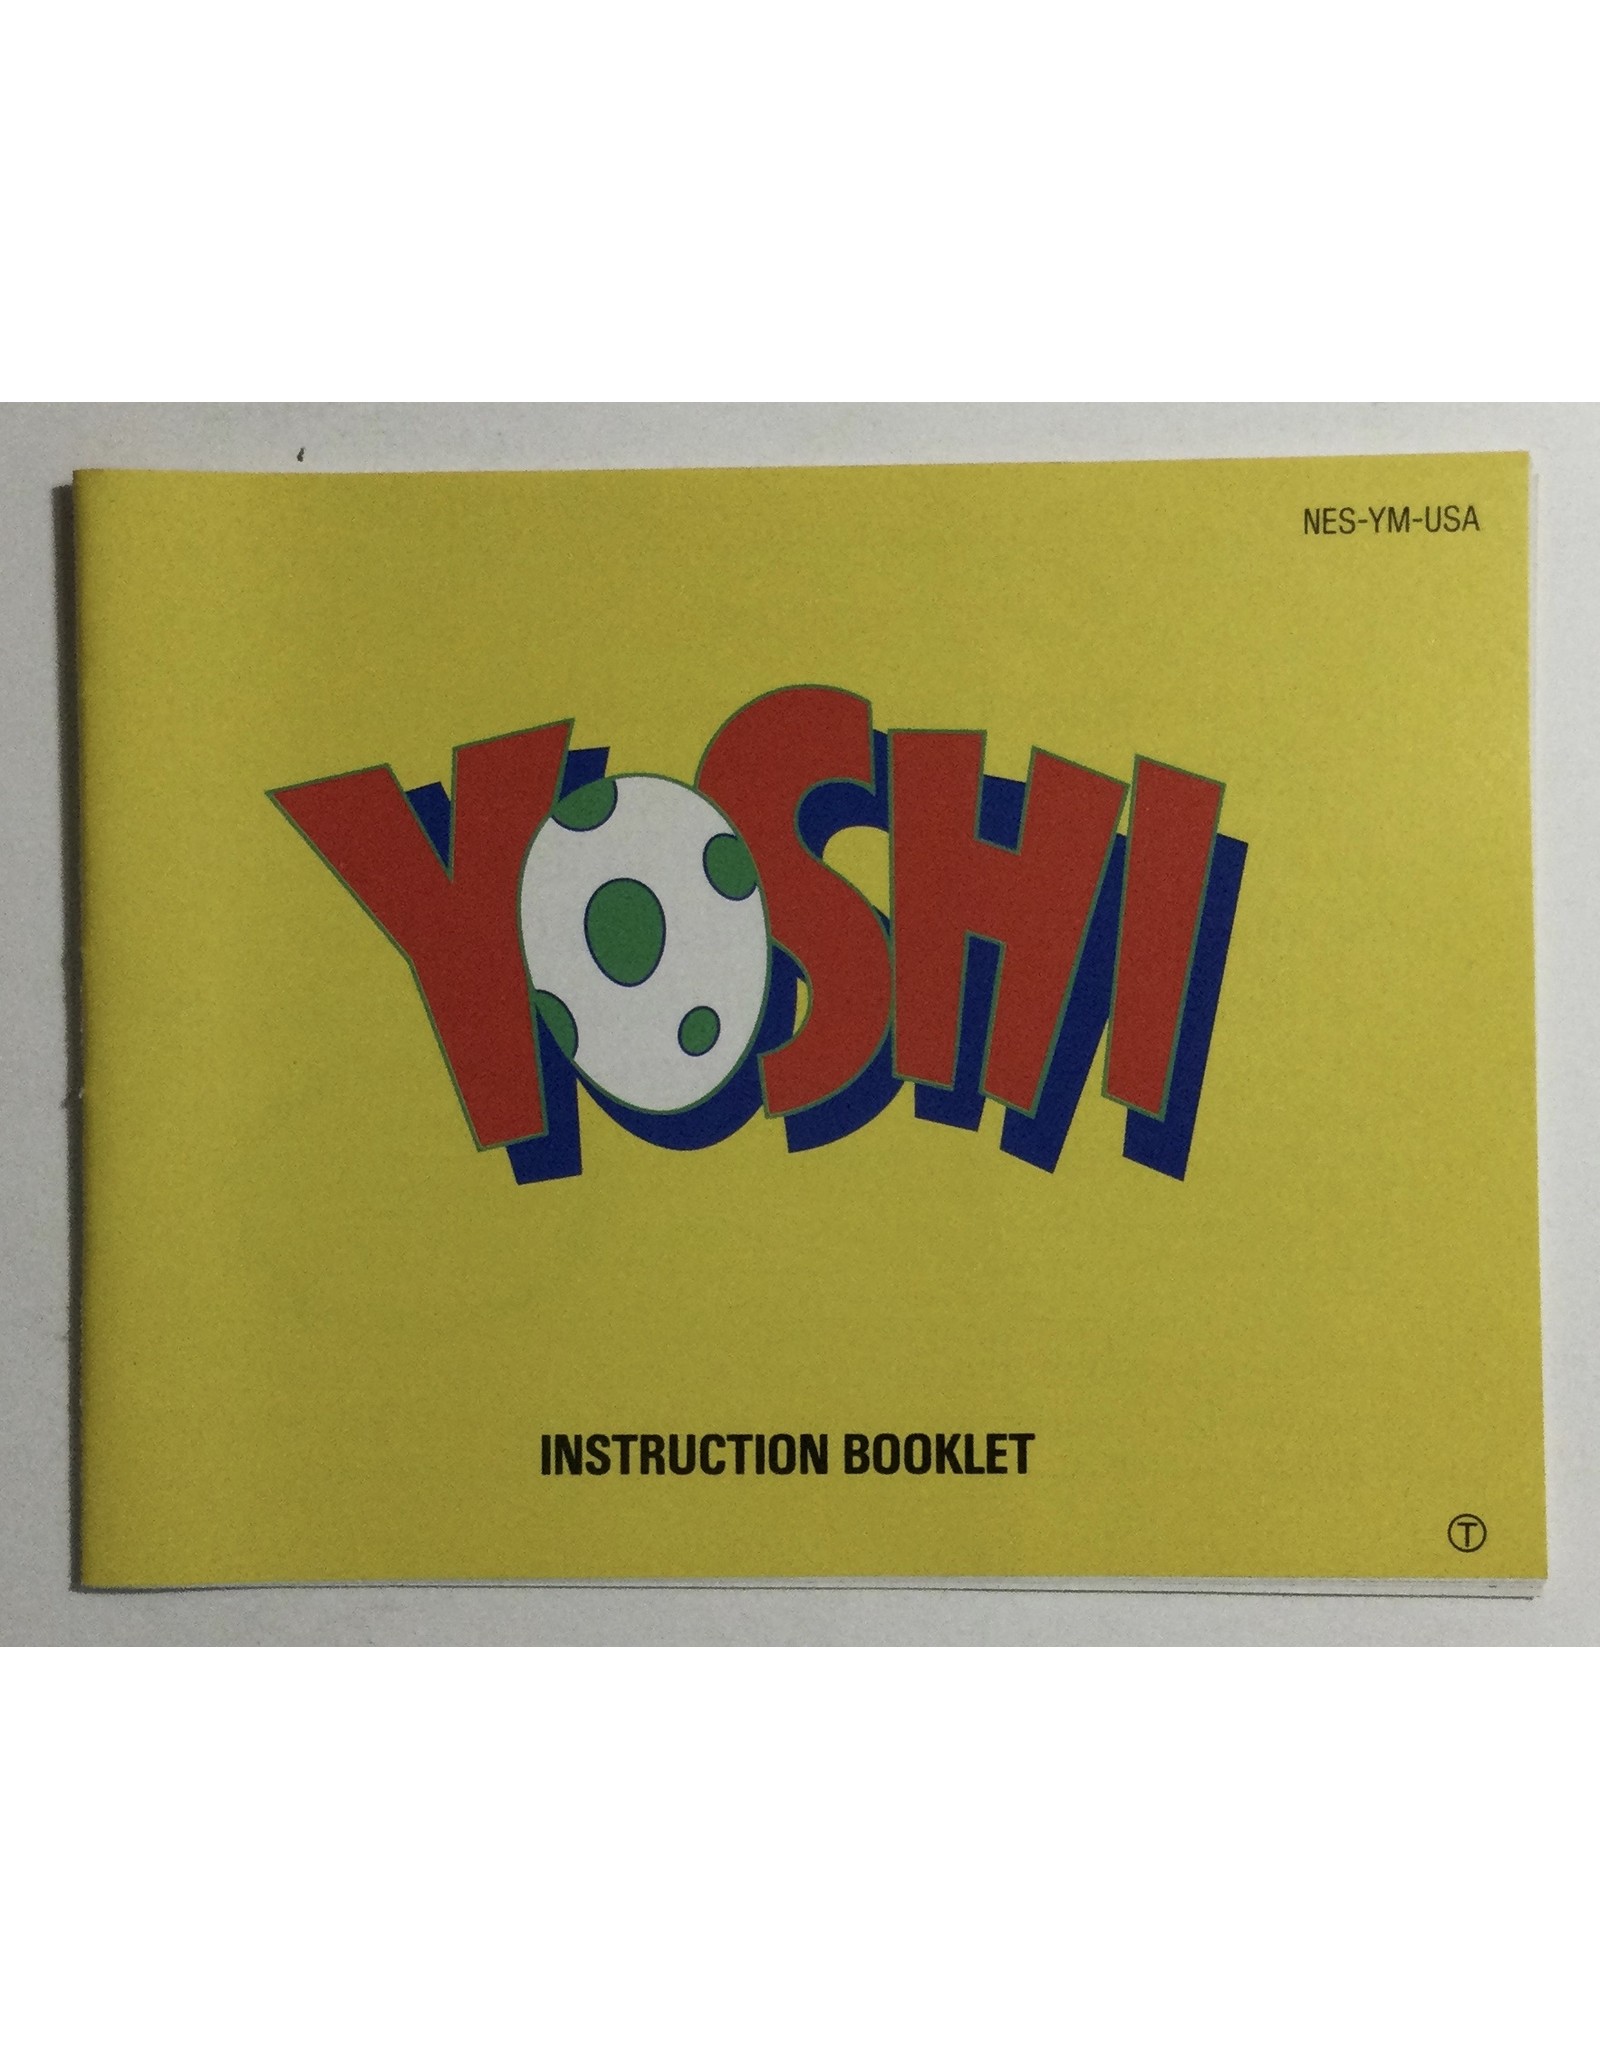 Nintendo Yoshi for Nintendo Entertainment System (NES)